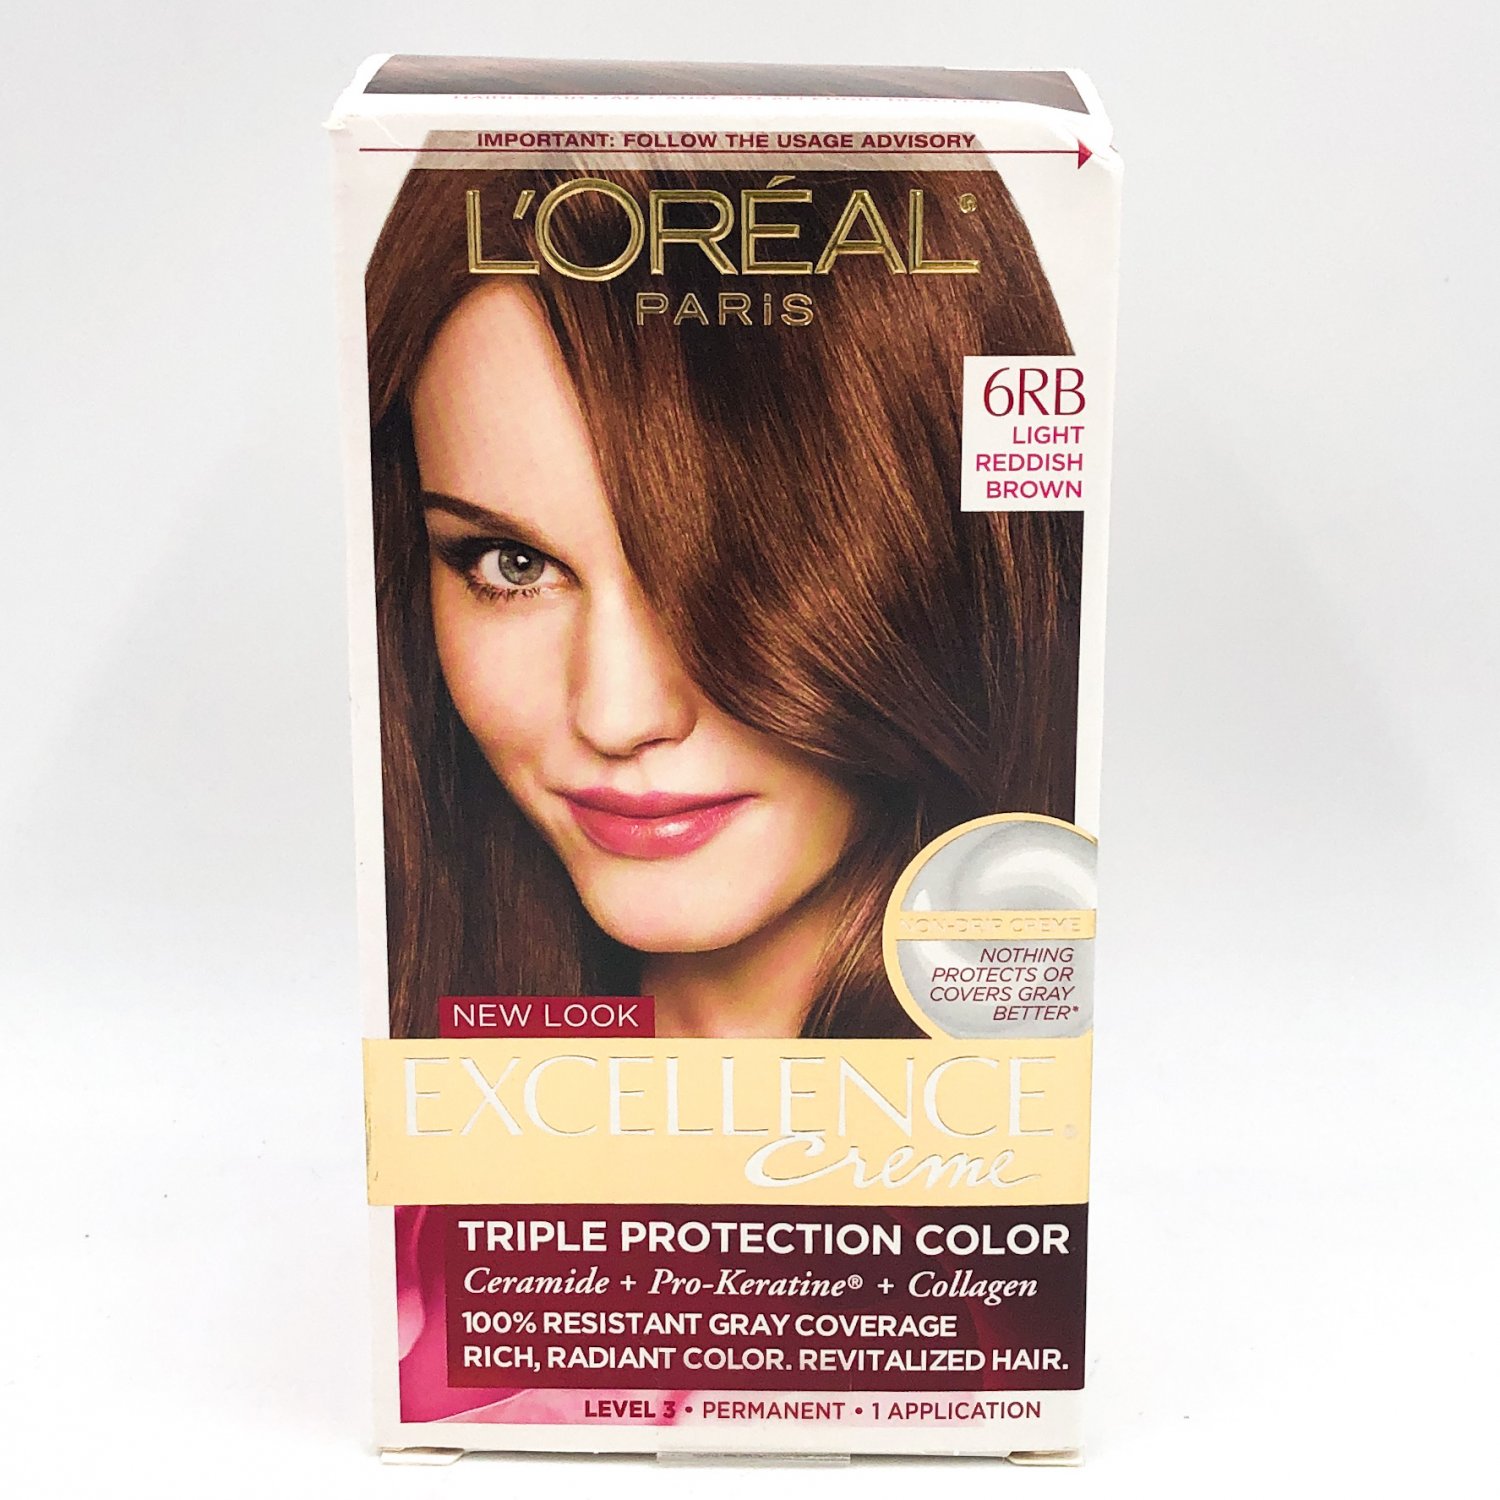 L'Oreal Paris Excellence Creme Hair Color Dye 6RB Light Reddish Brown